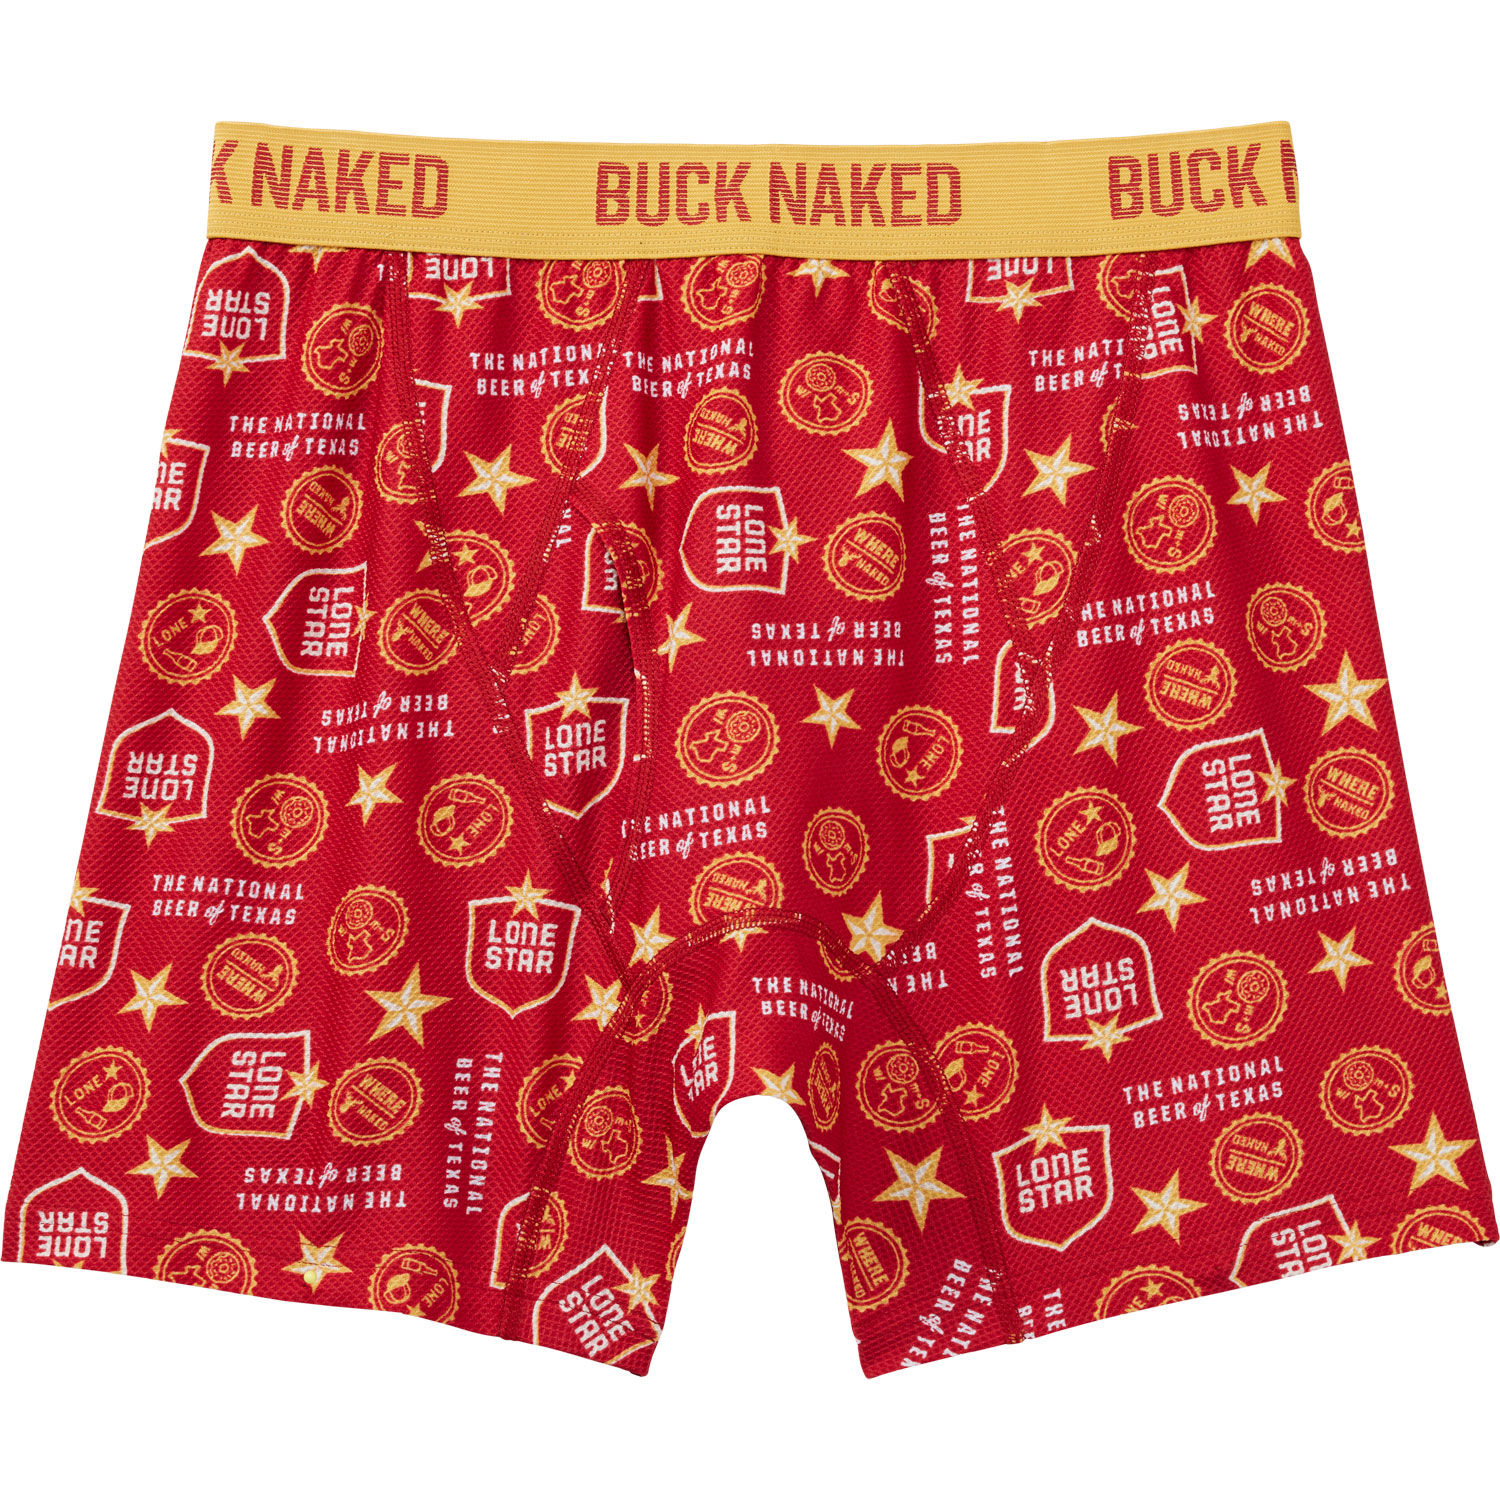 Boys Underwear  Buy Funky Trunks Comfy Undies Online